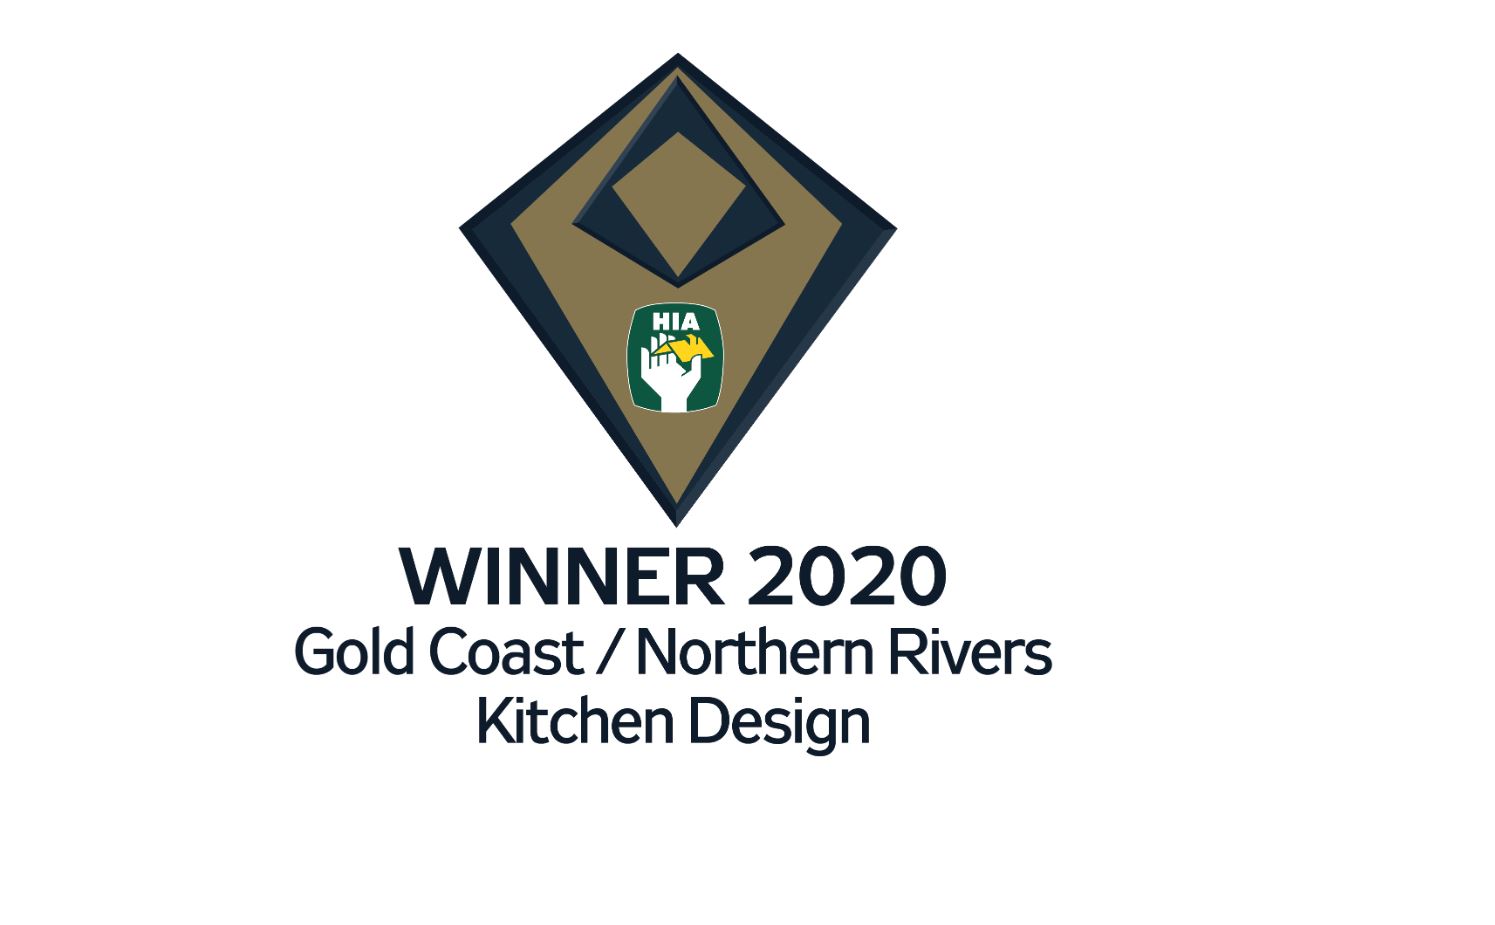 Gold Coast/Northern Rivers Kitchen Design Award 2020 logo